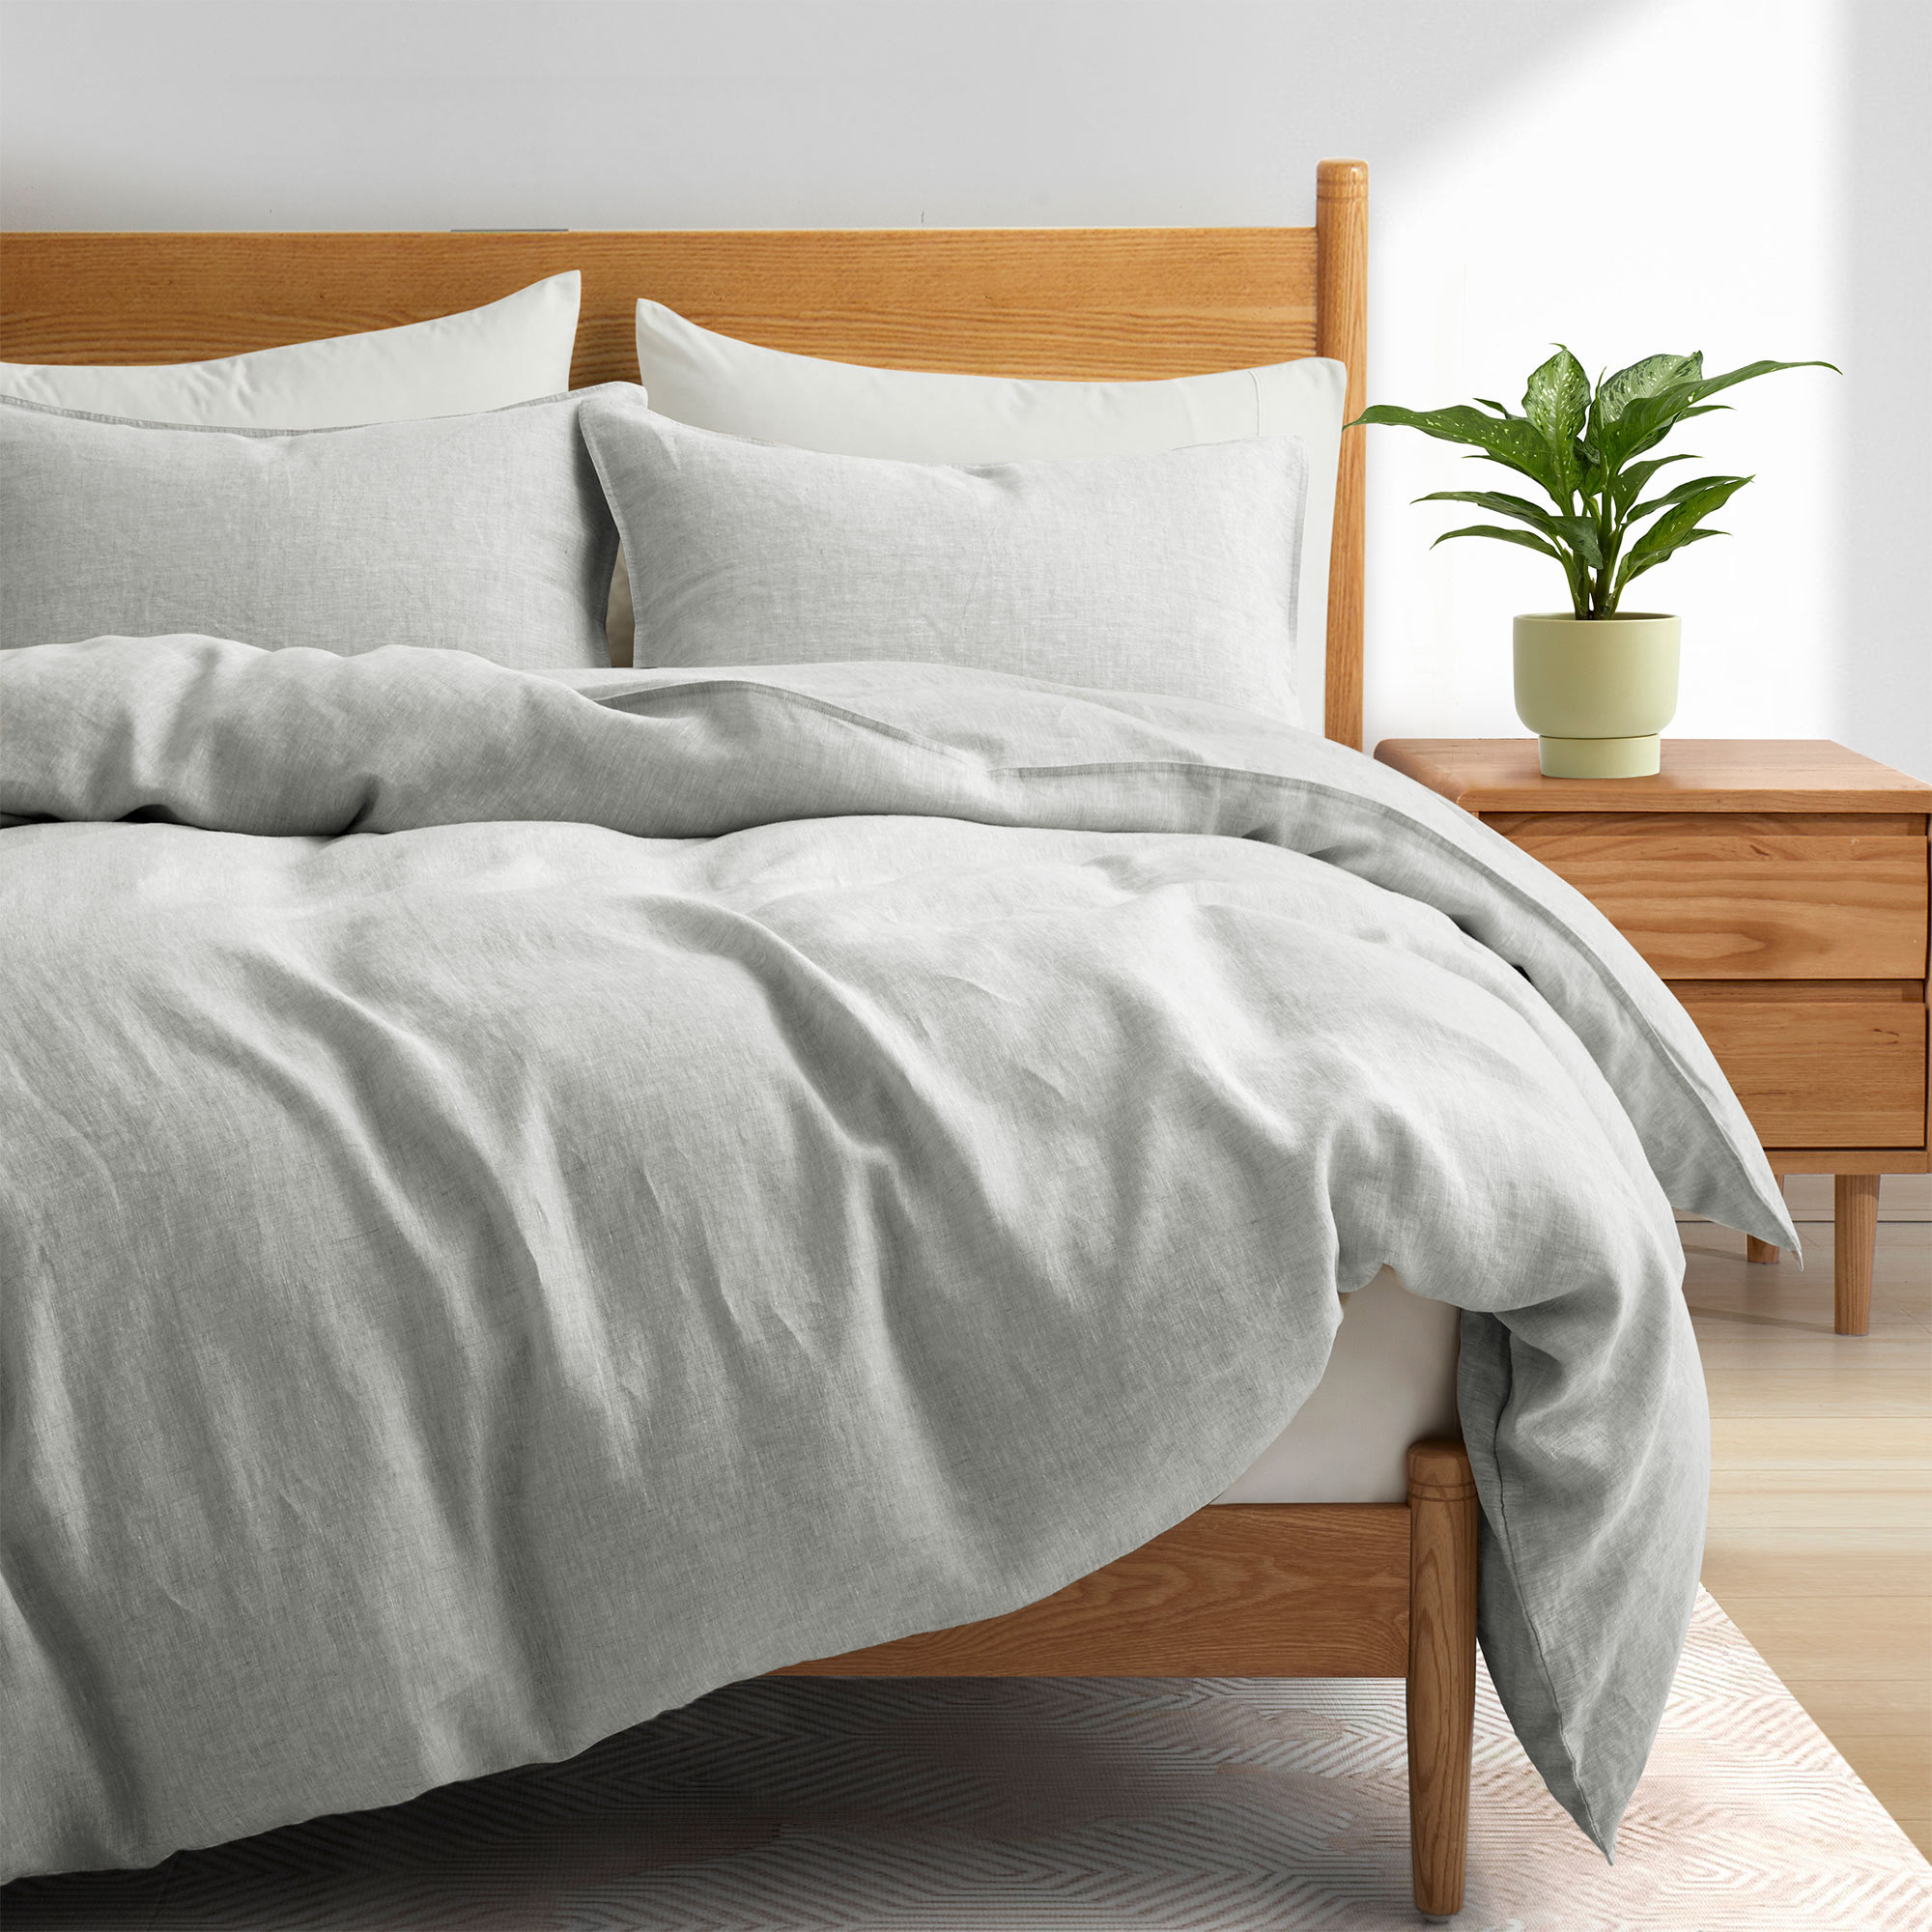 Premium Flax Linen Duvet Cover Set With Pillow Shams Breathable Moisture Wicking Bedding Set - Light Gray, Twin